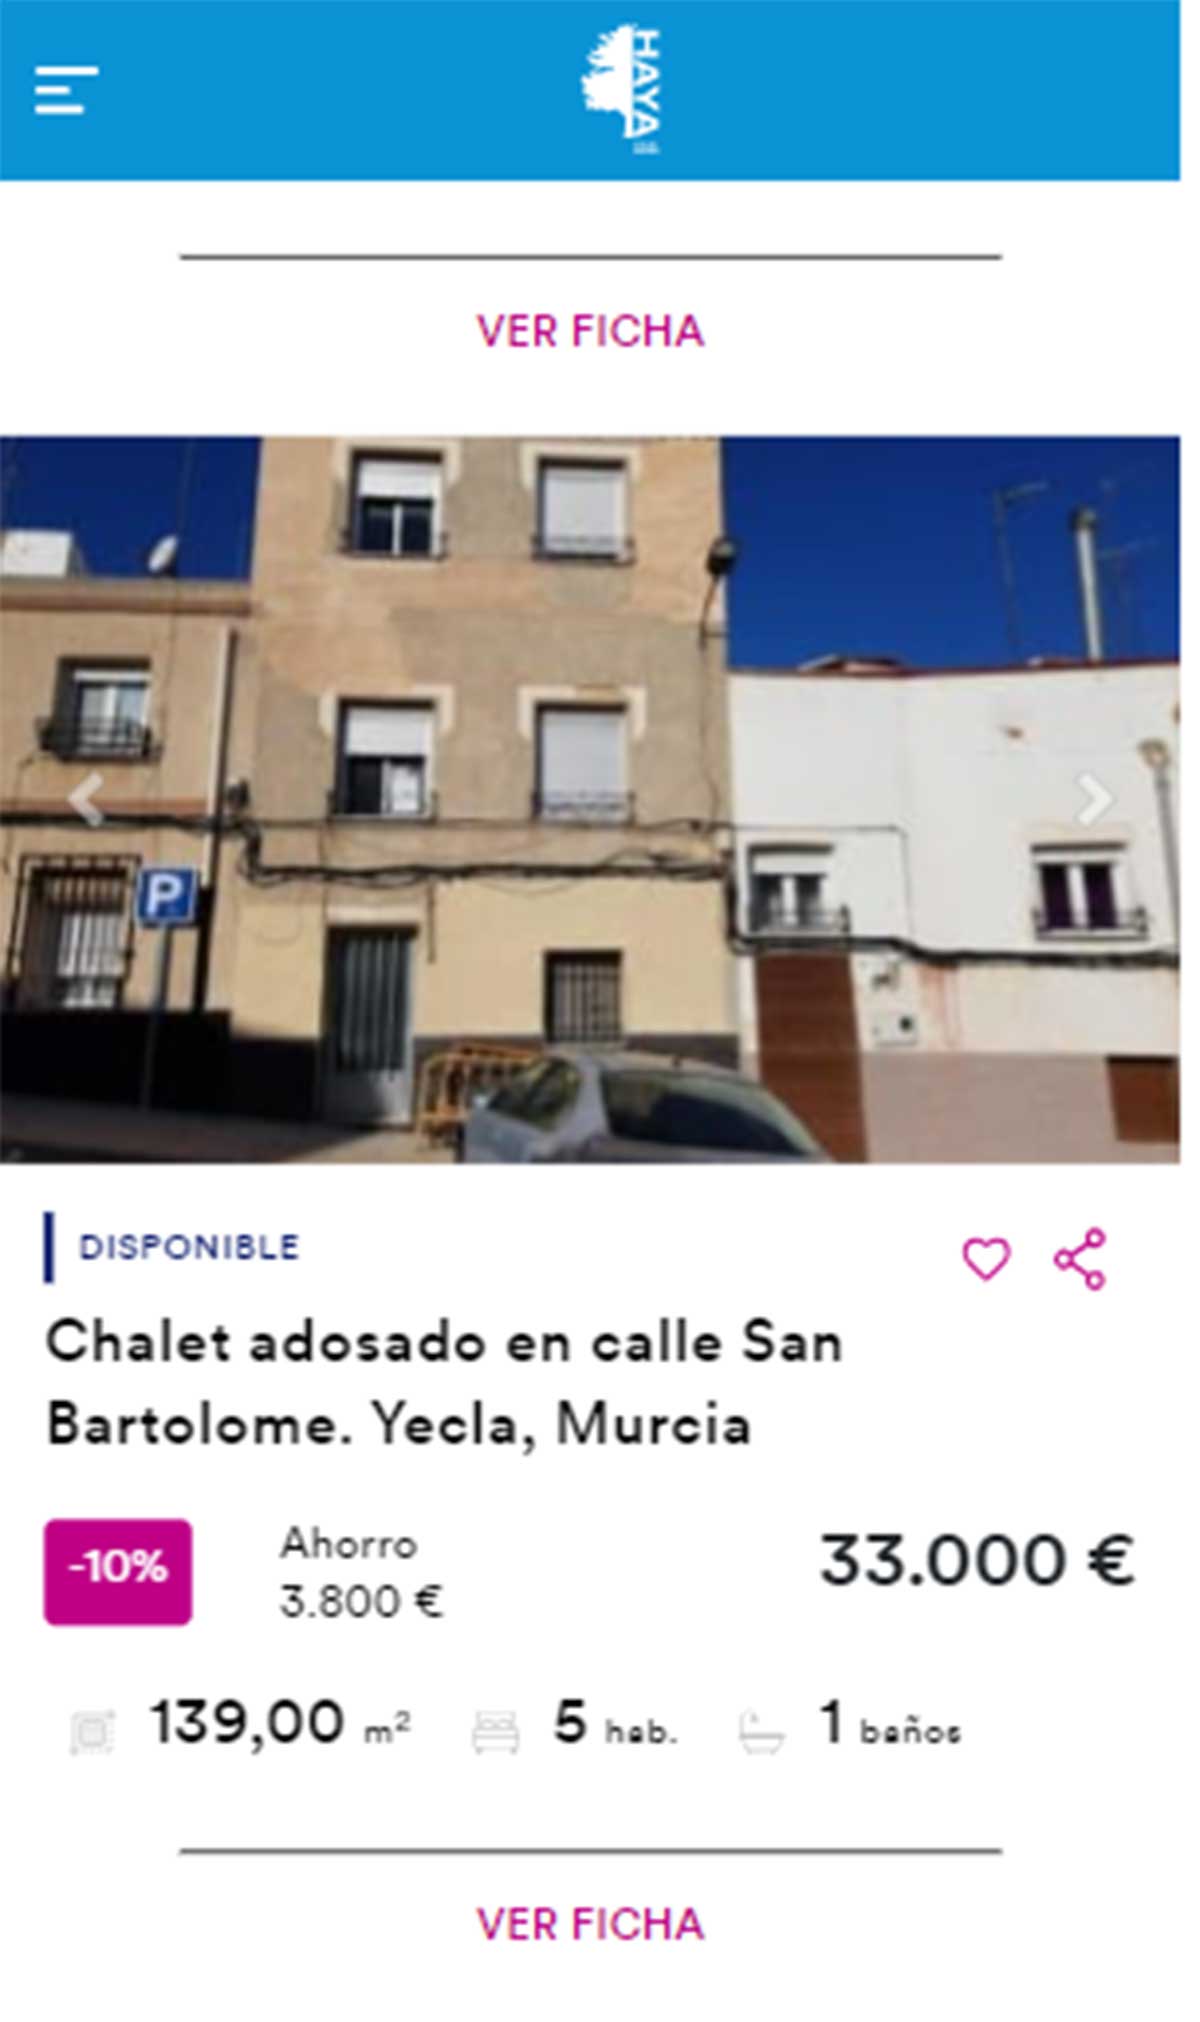 Chalet adosado por 33.000 euros